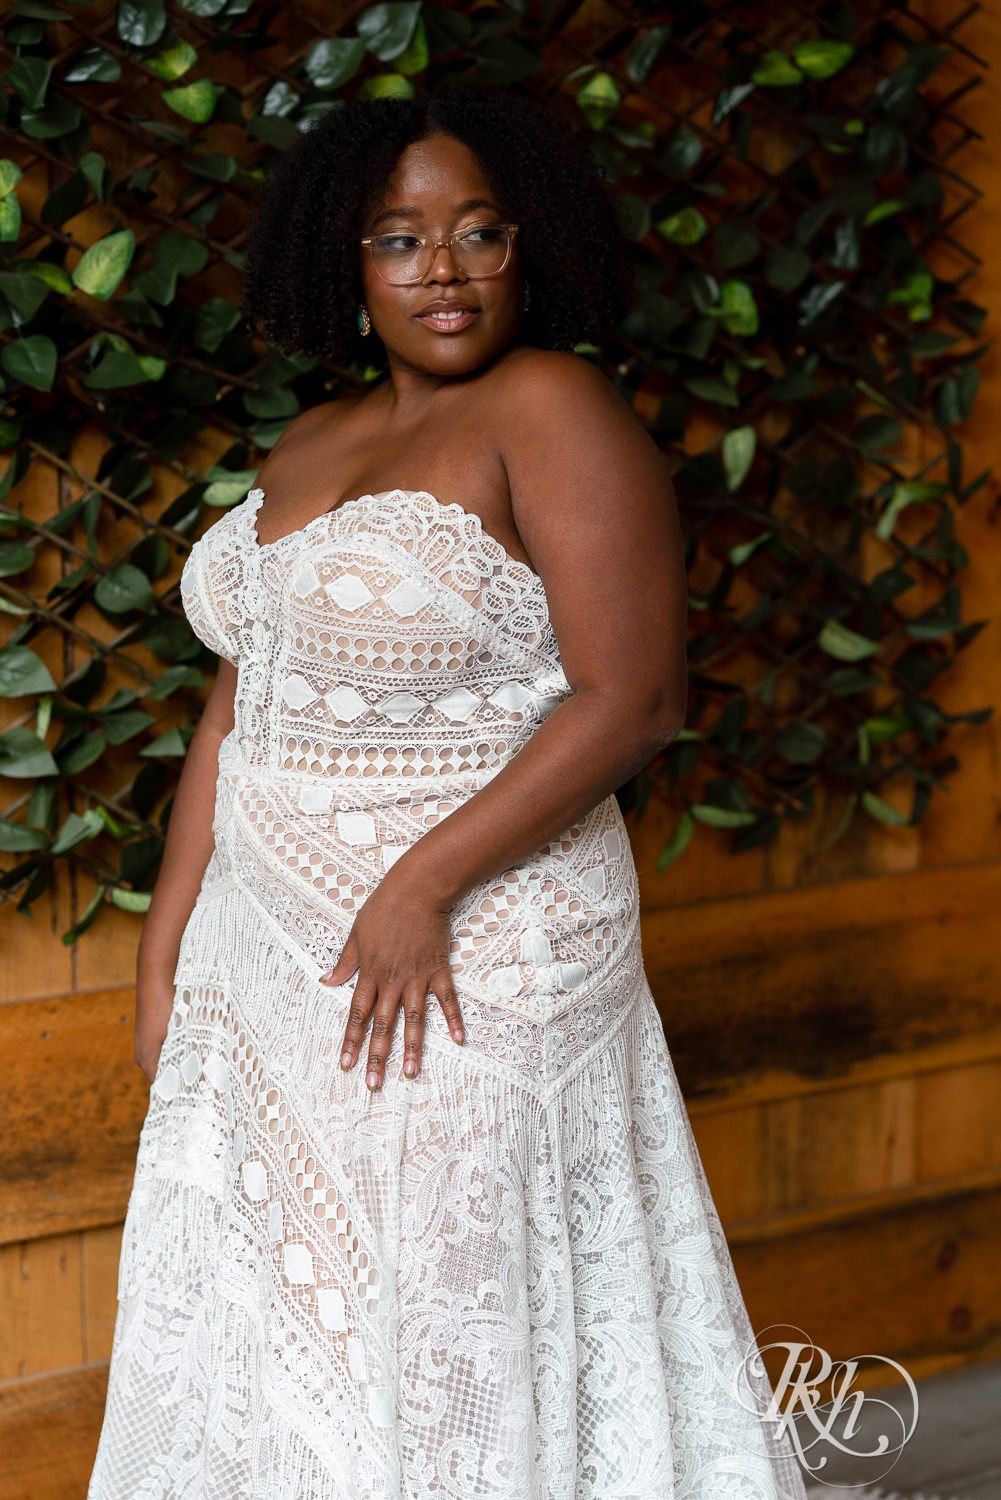 Black plus size bride looking over shoulder in wedding dresses in Minneapolis, Minnesota.